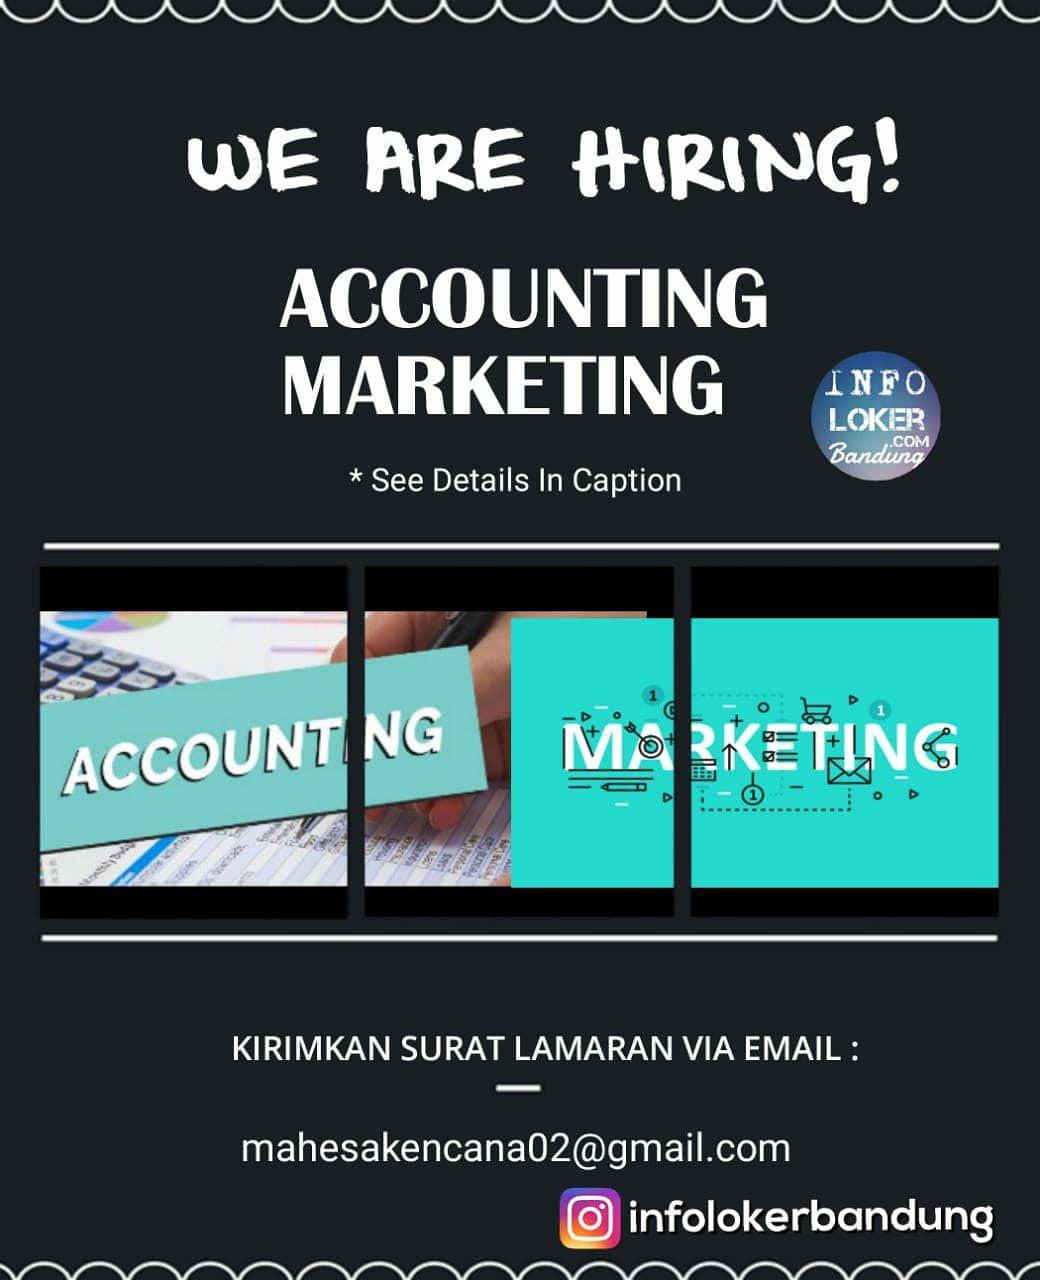 Lowongan Kerja Accounting & Marketing Mahesa Kencana Bandung September 2018